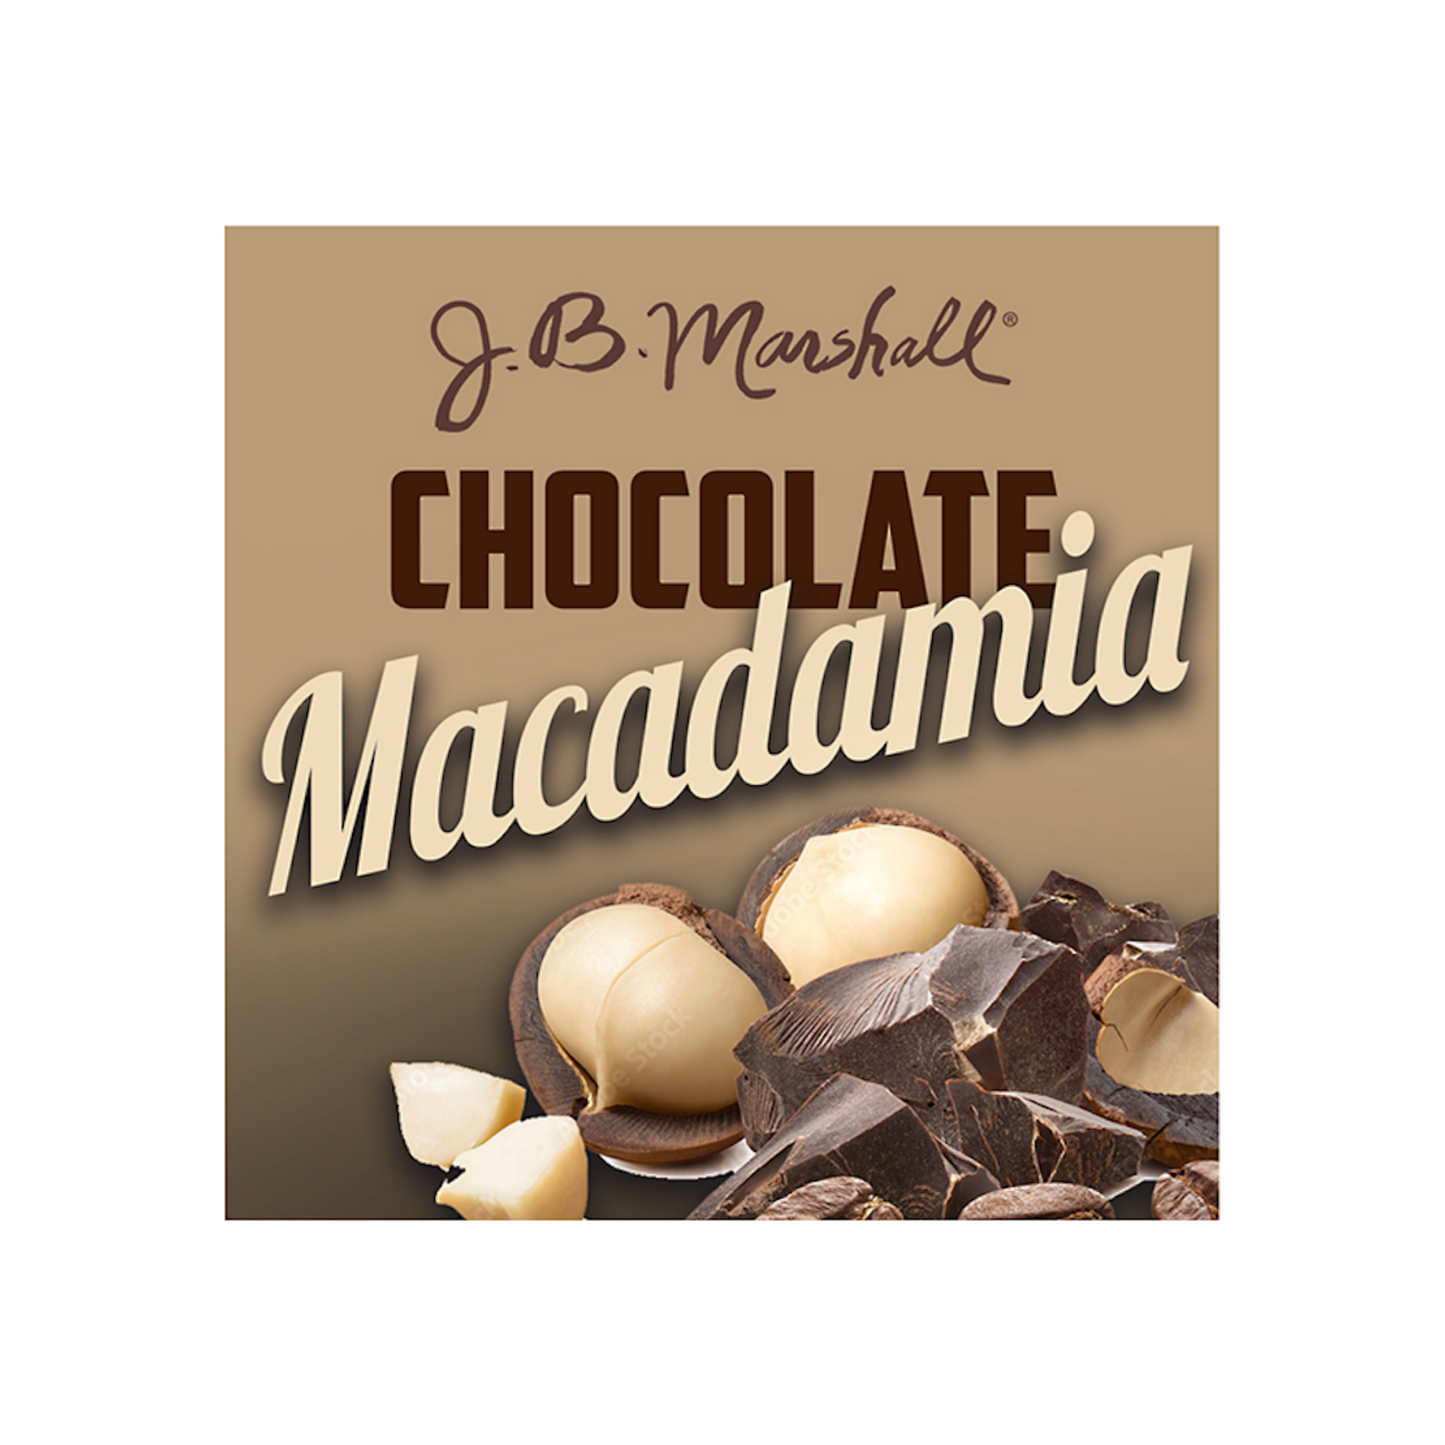 Chocolate Macadamia